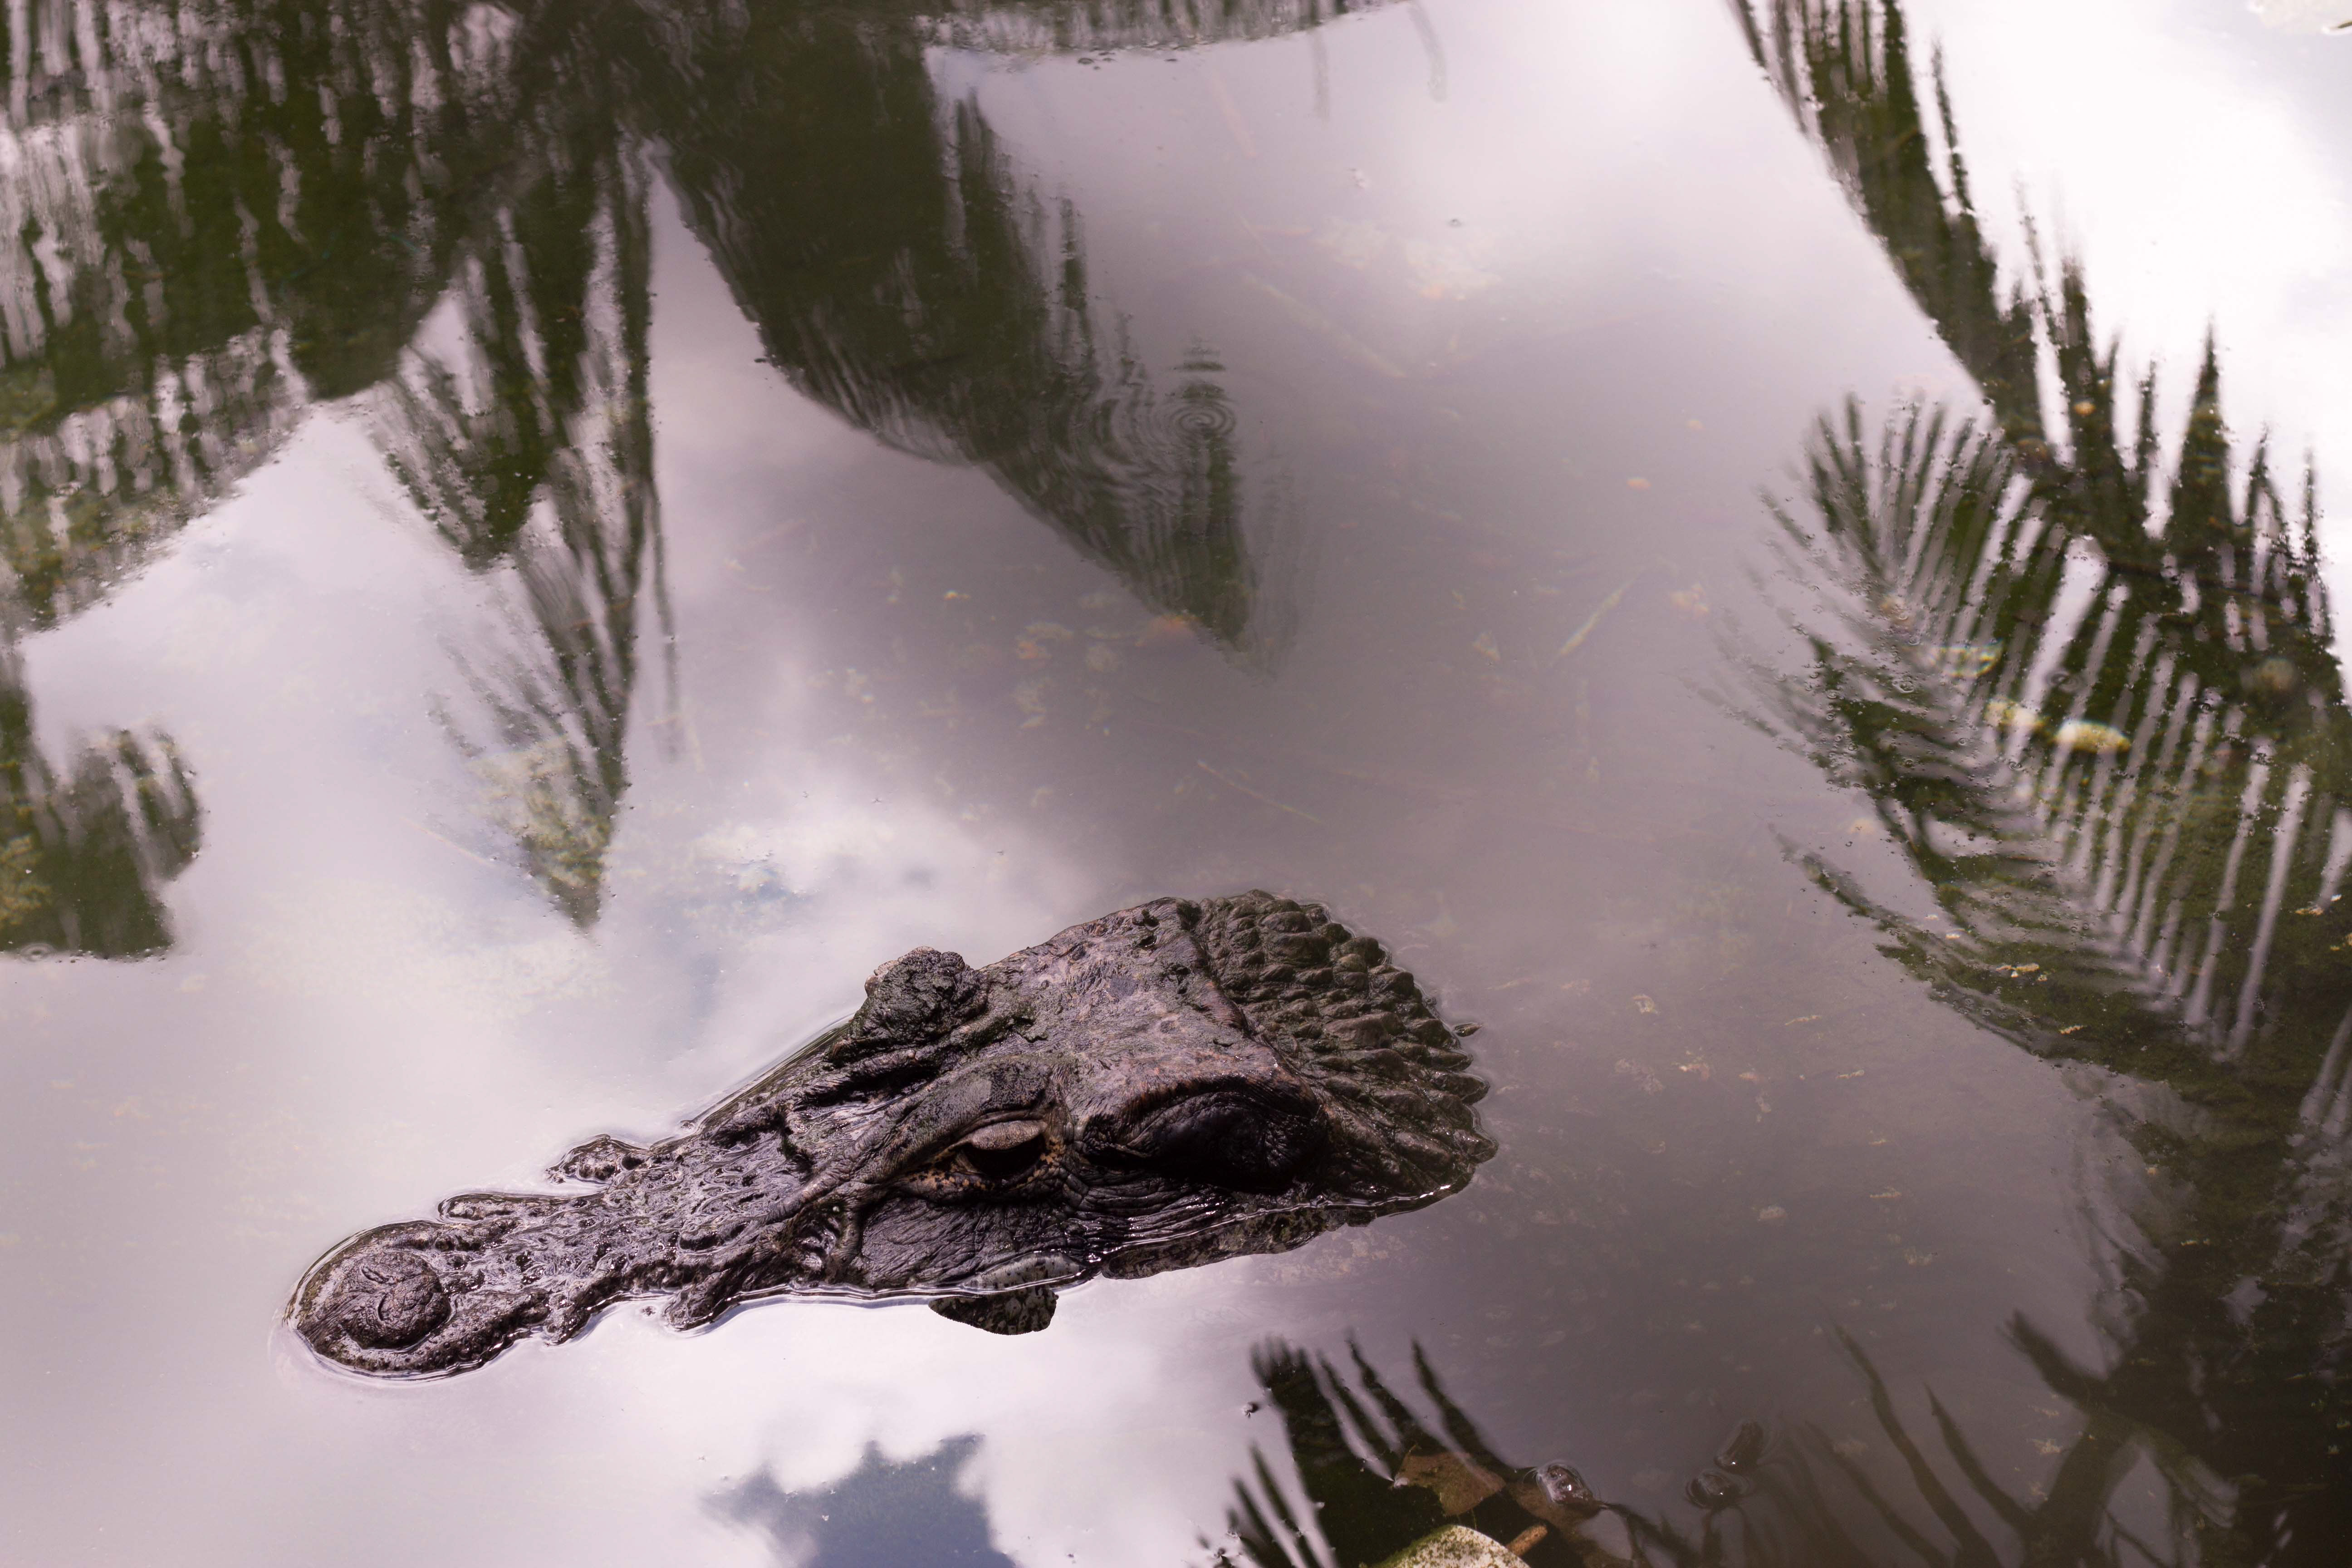 Brazil Manaus Amazon Alligator